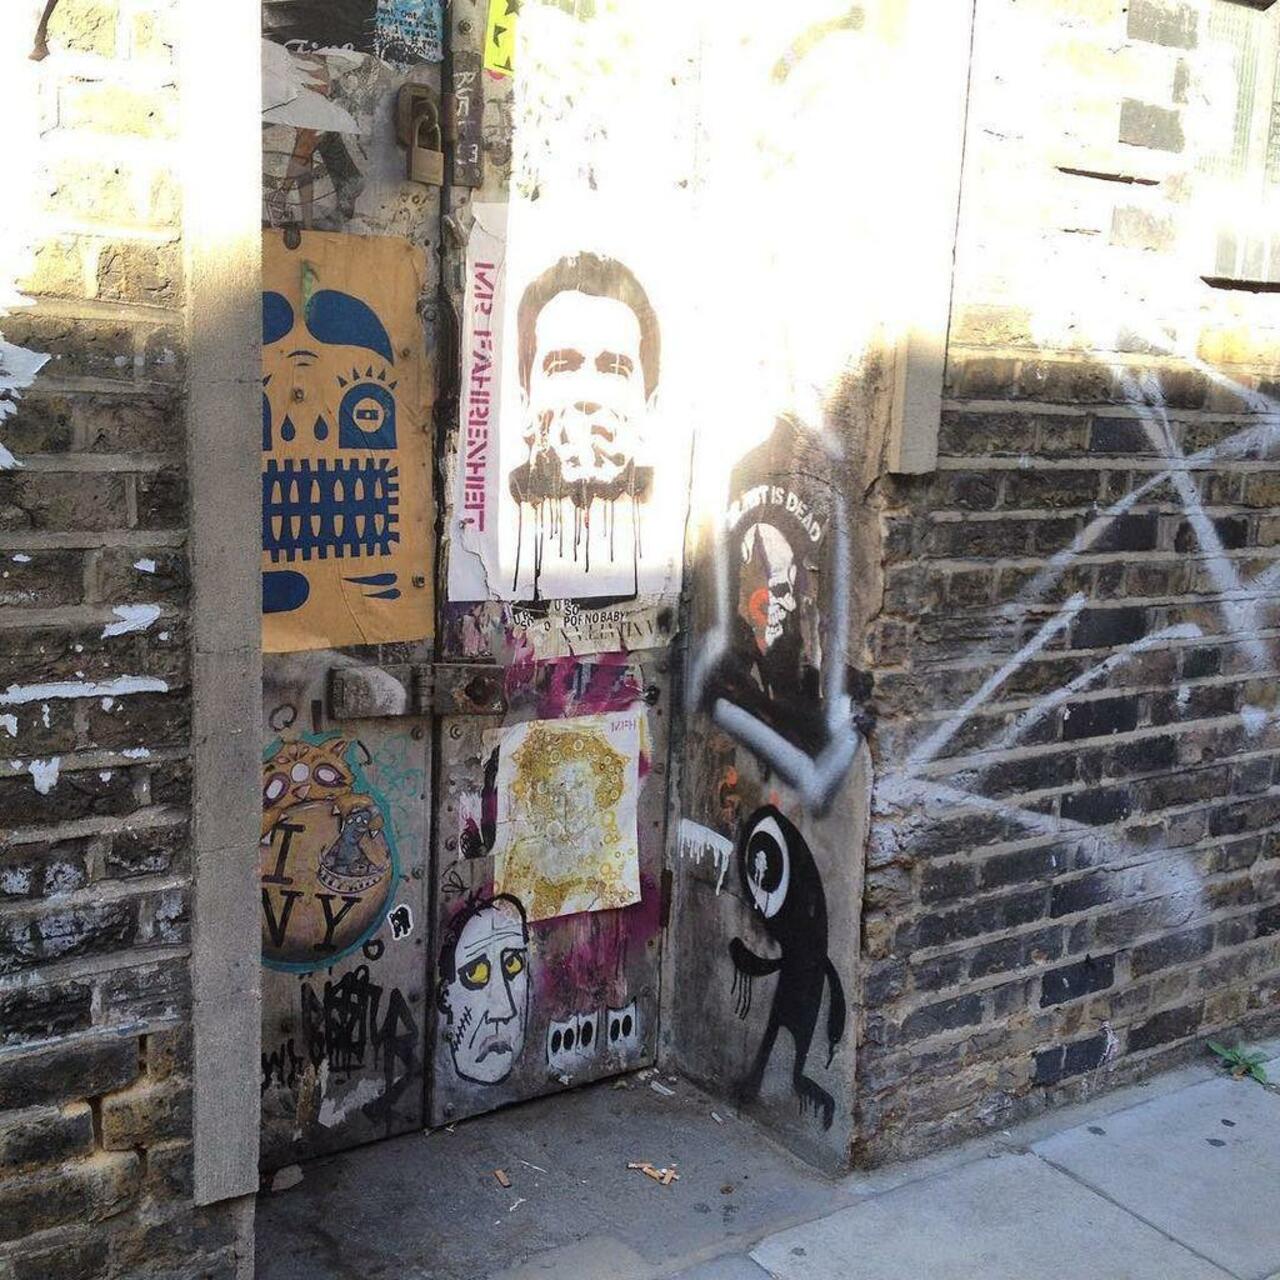 #streetart #graffiti #streetartlondon #london #thisislondon by isadarko http://t.co/XHnE5zBrL6